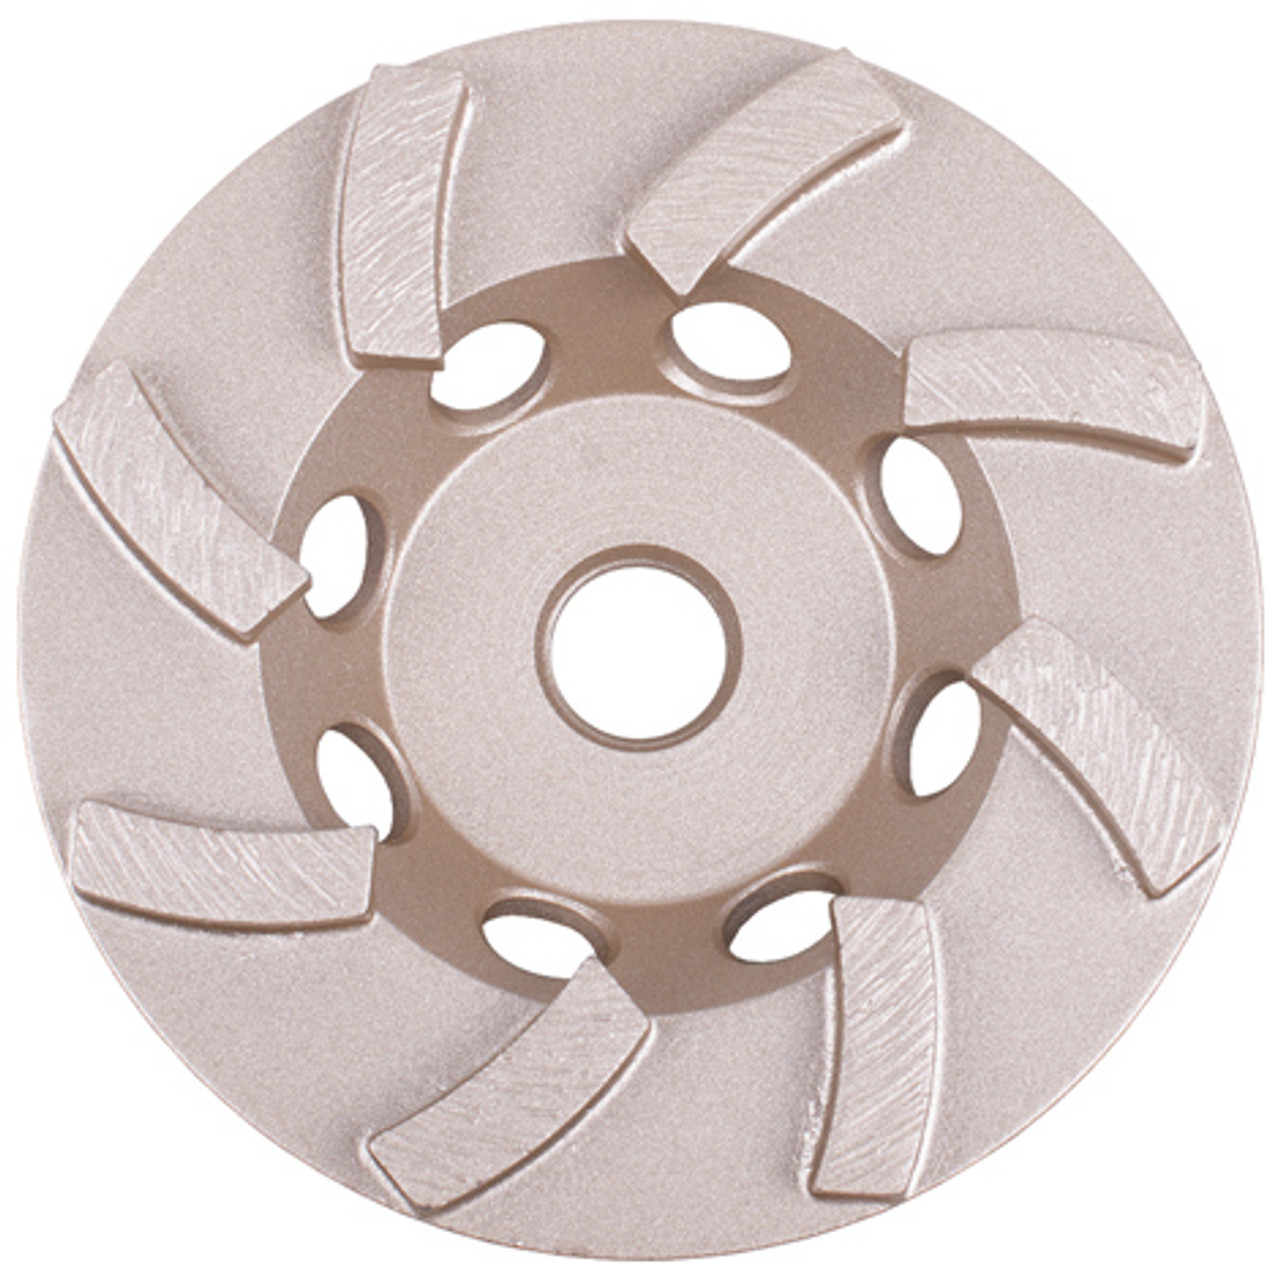 Diamond Vantage 7 x 5/8-11 inch Turbo Single Cup Wheel, X1 Standard Grade